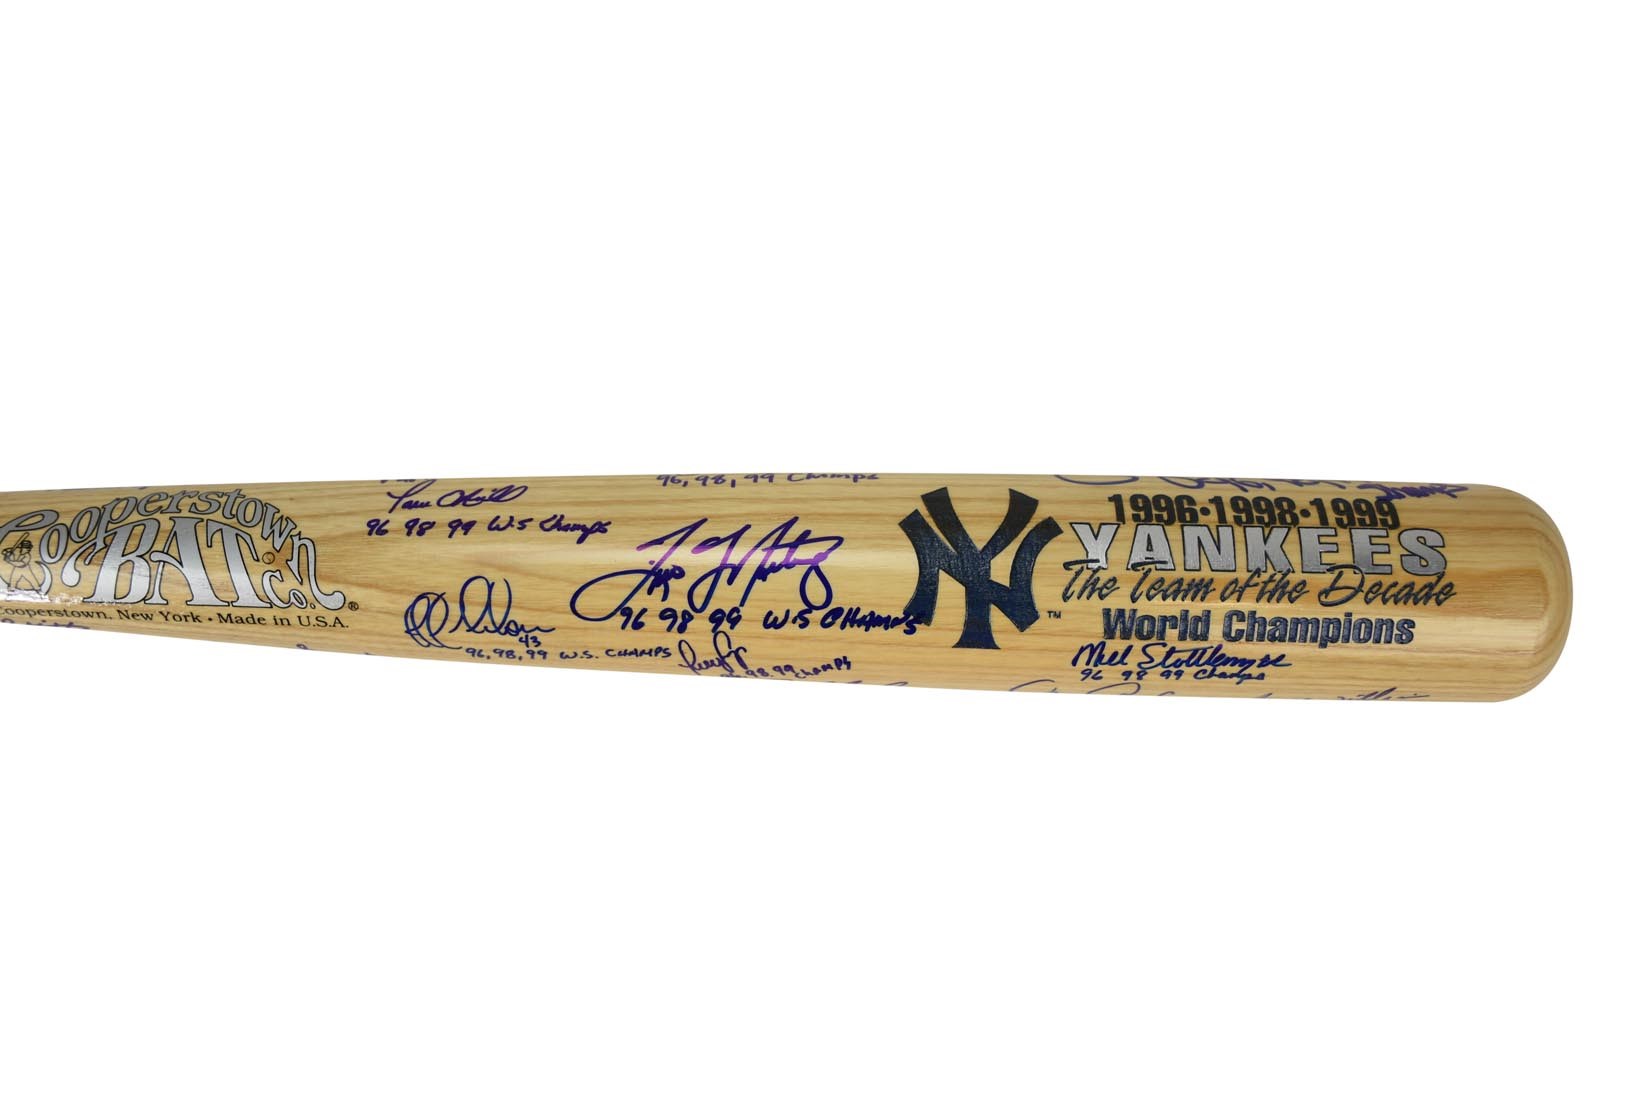 1996-99 NY Yankees World Series Champions Signed & Inscribed Bat - LE 1 of 25 (PSA)